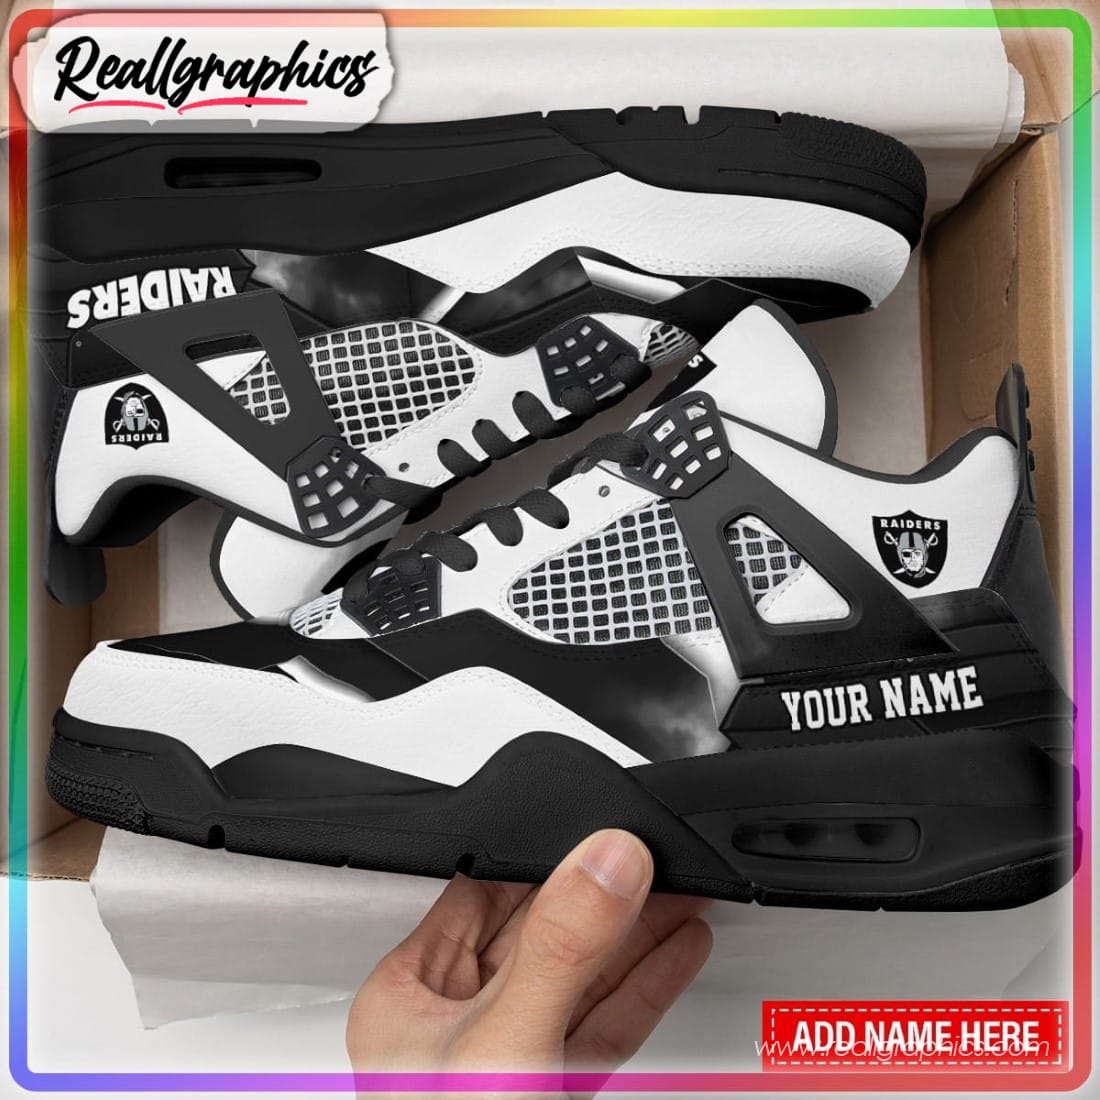 Carolina Panthers Thunder Custom Air Jordan 4 Shoes - Reallgraphics